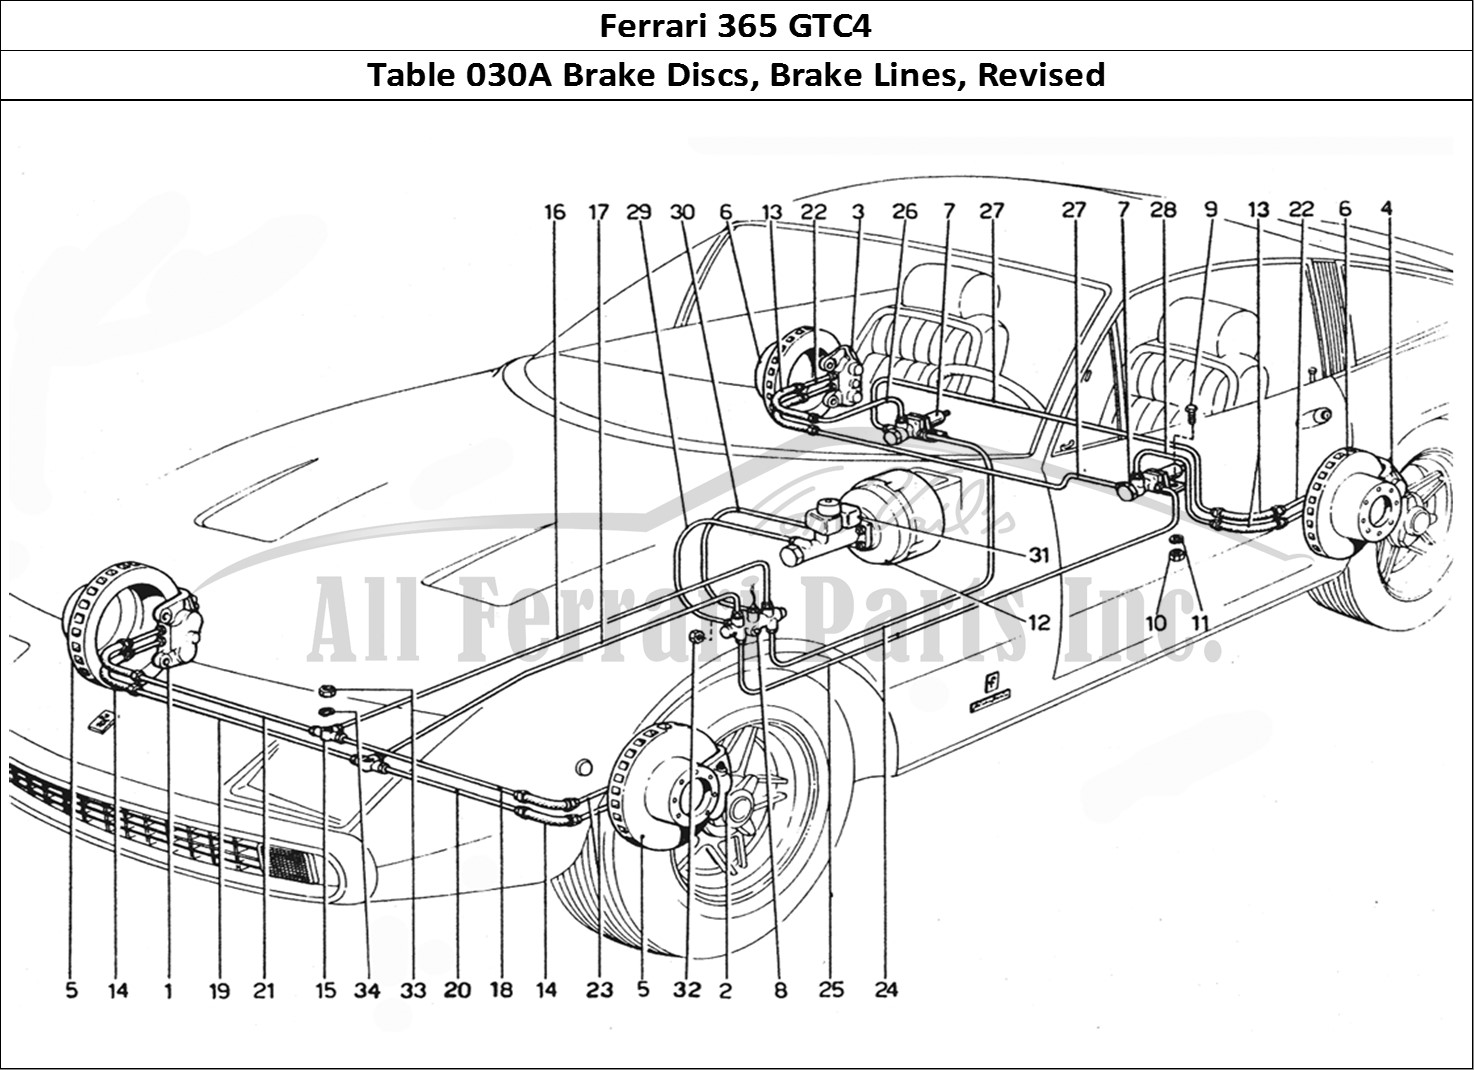 Ferrari Parts Ferrari 365 GTC4 (Mechanical) Page 030 Brake discs & brake lines